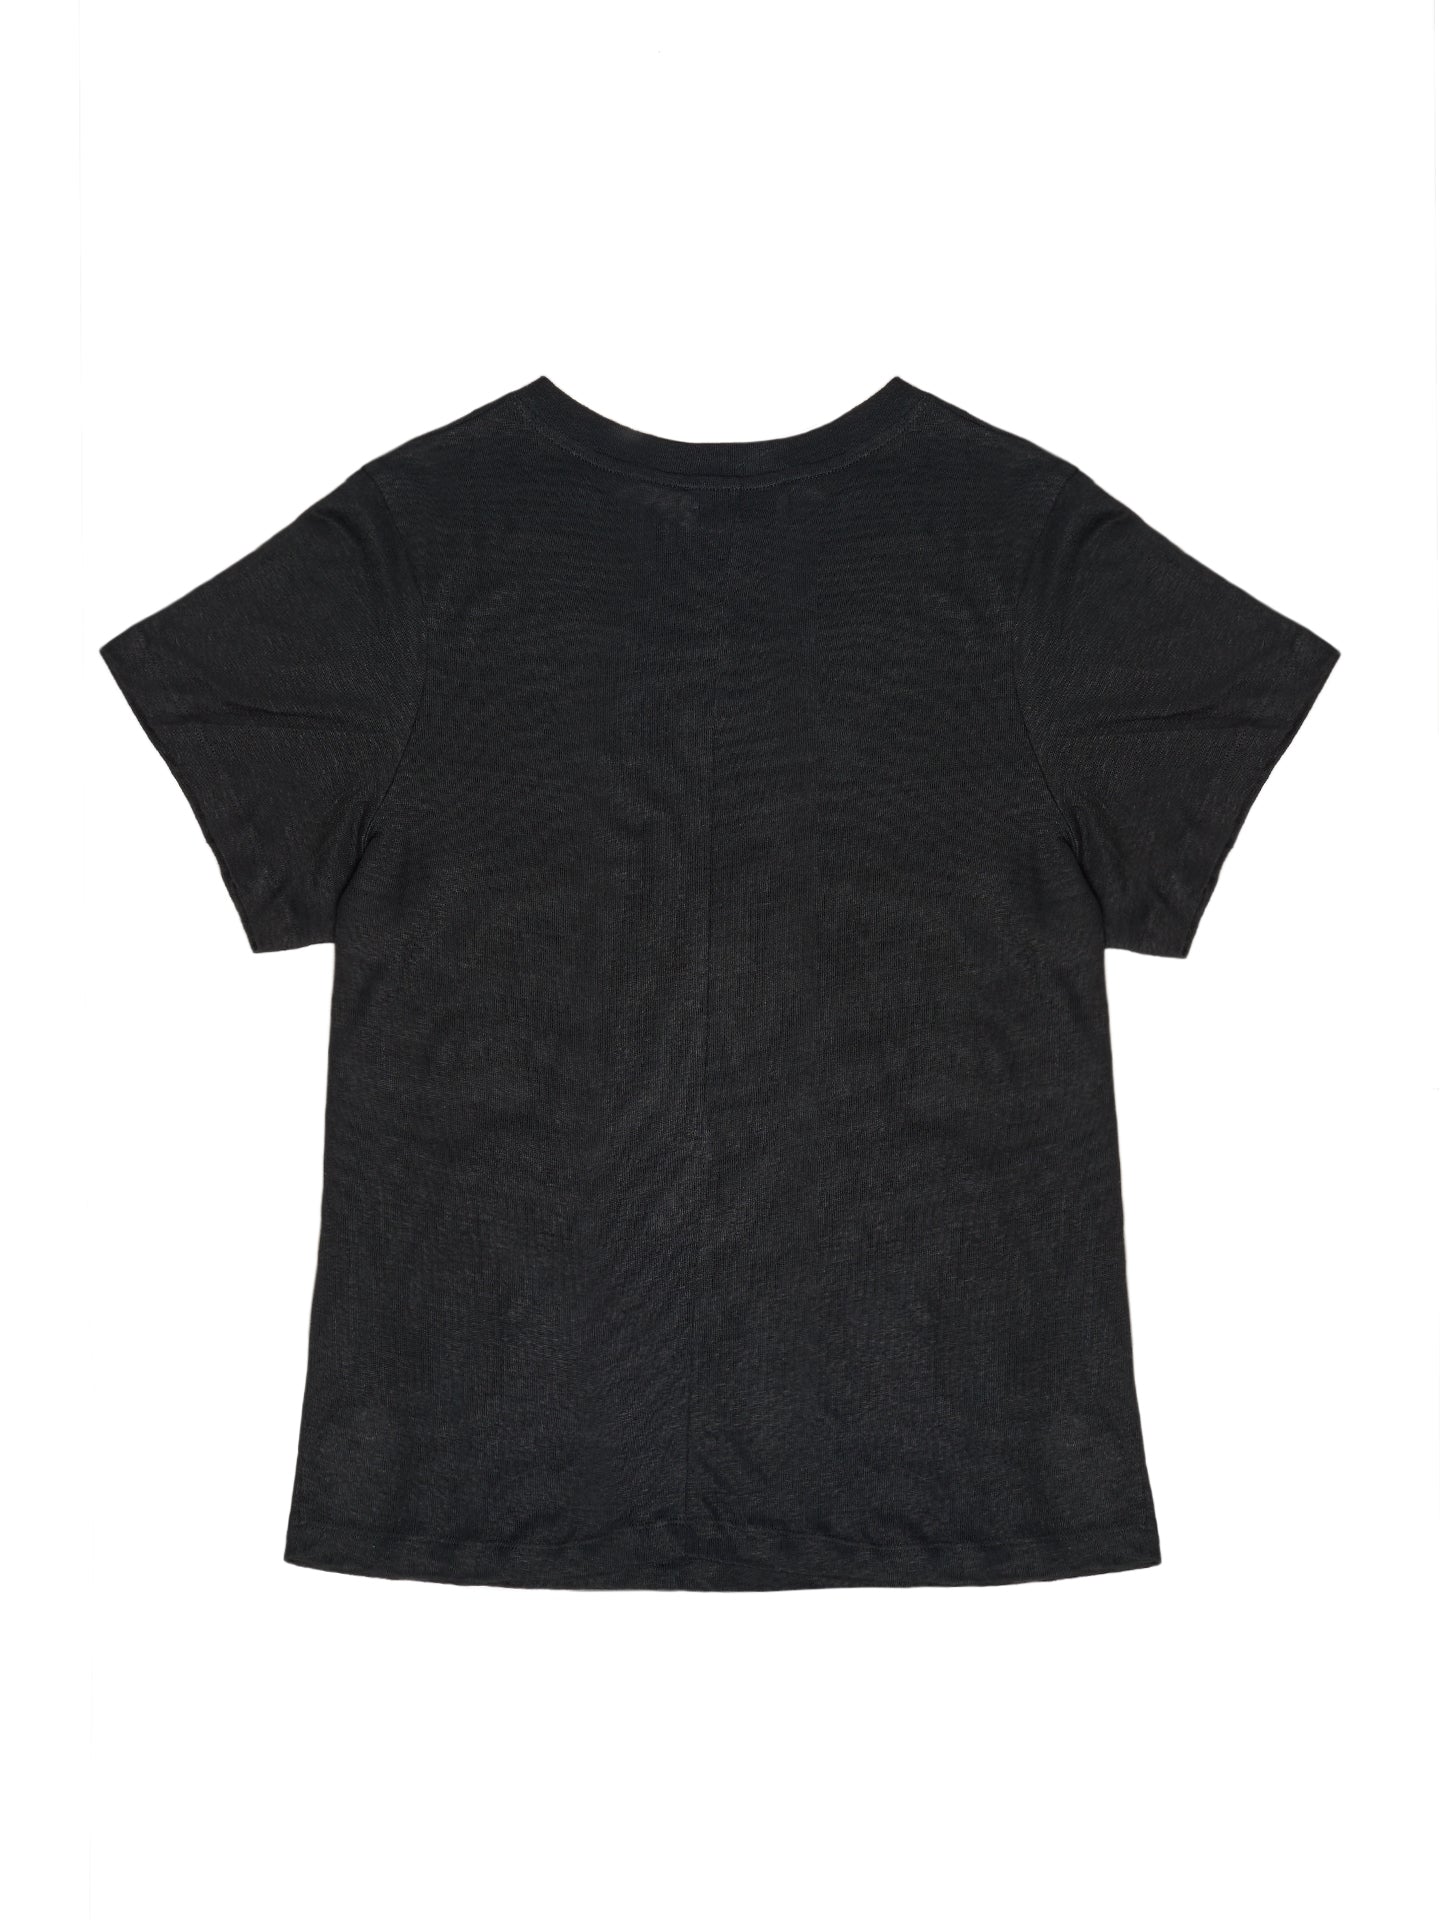 Leinen T-Shirt - schwarz